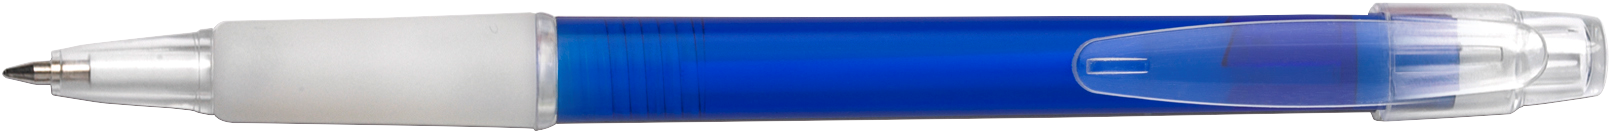 Carman ballpen 3321_005 (Blue)